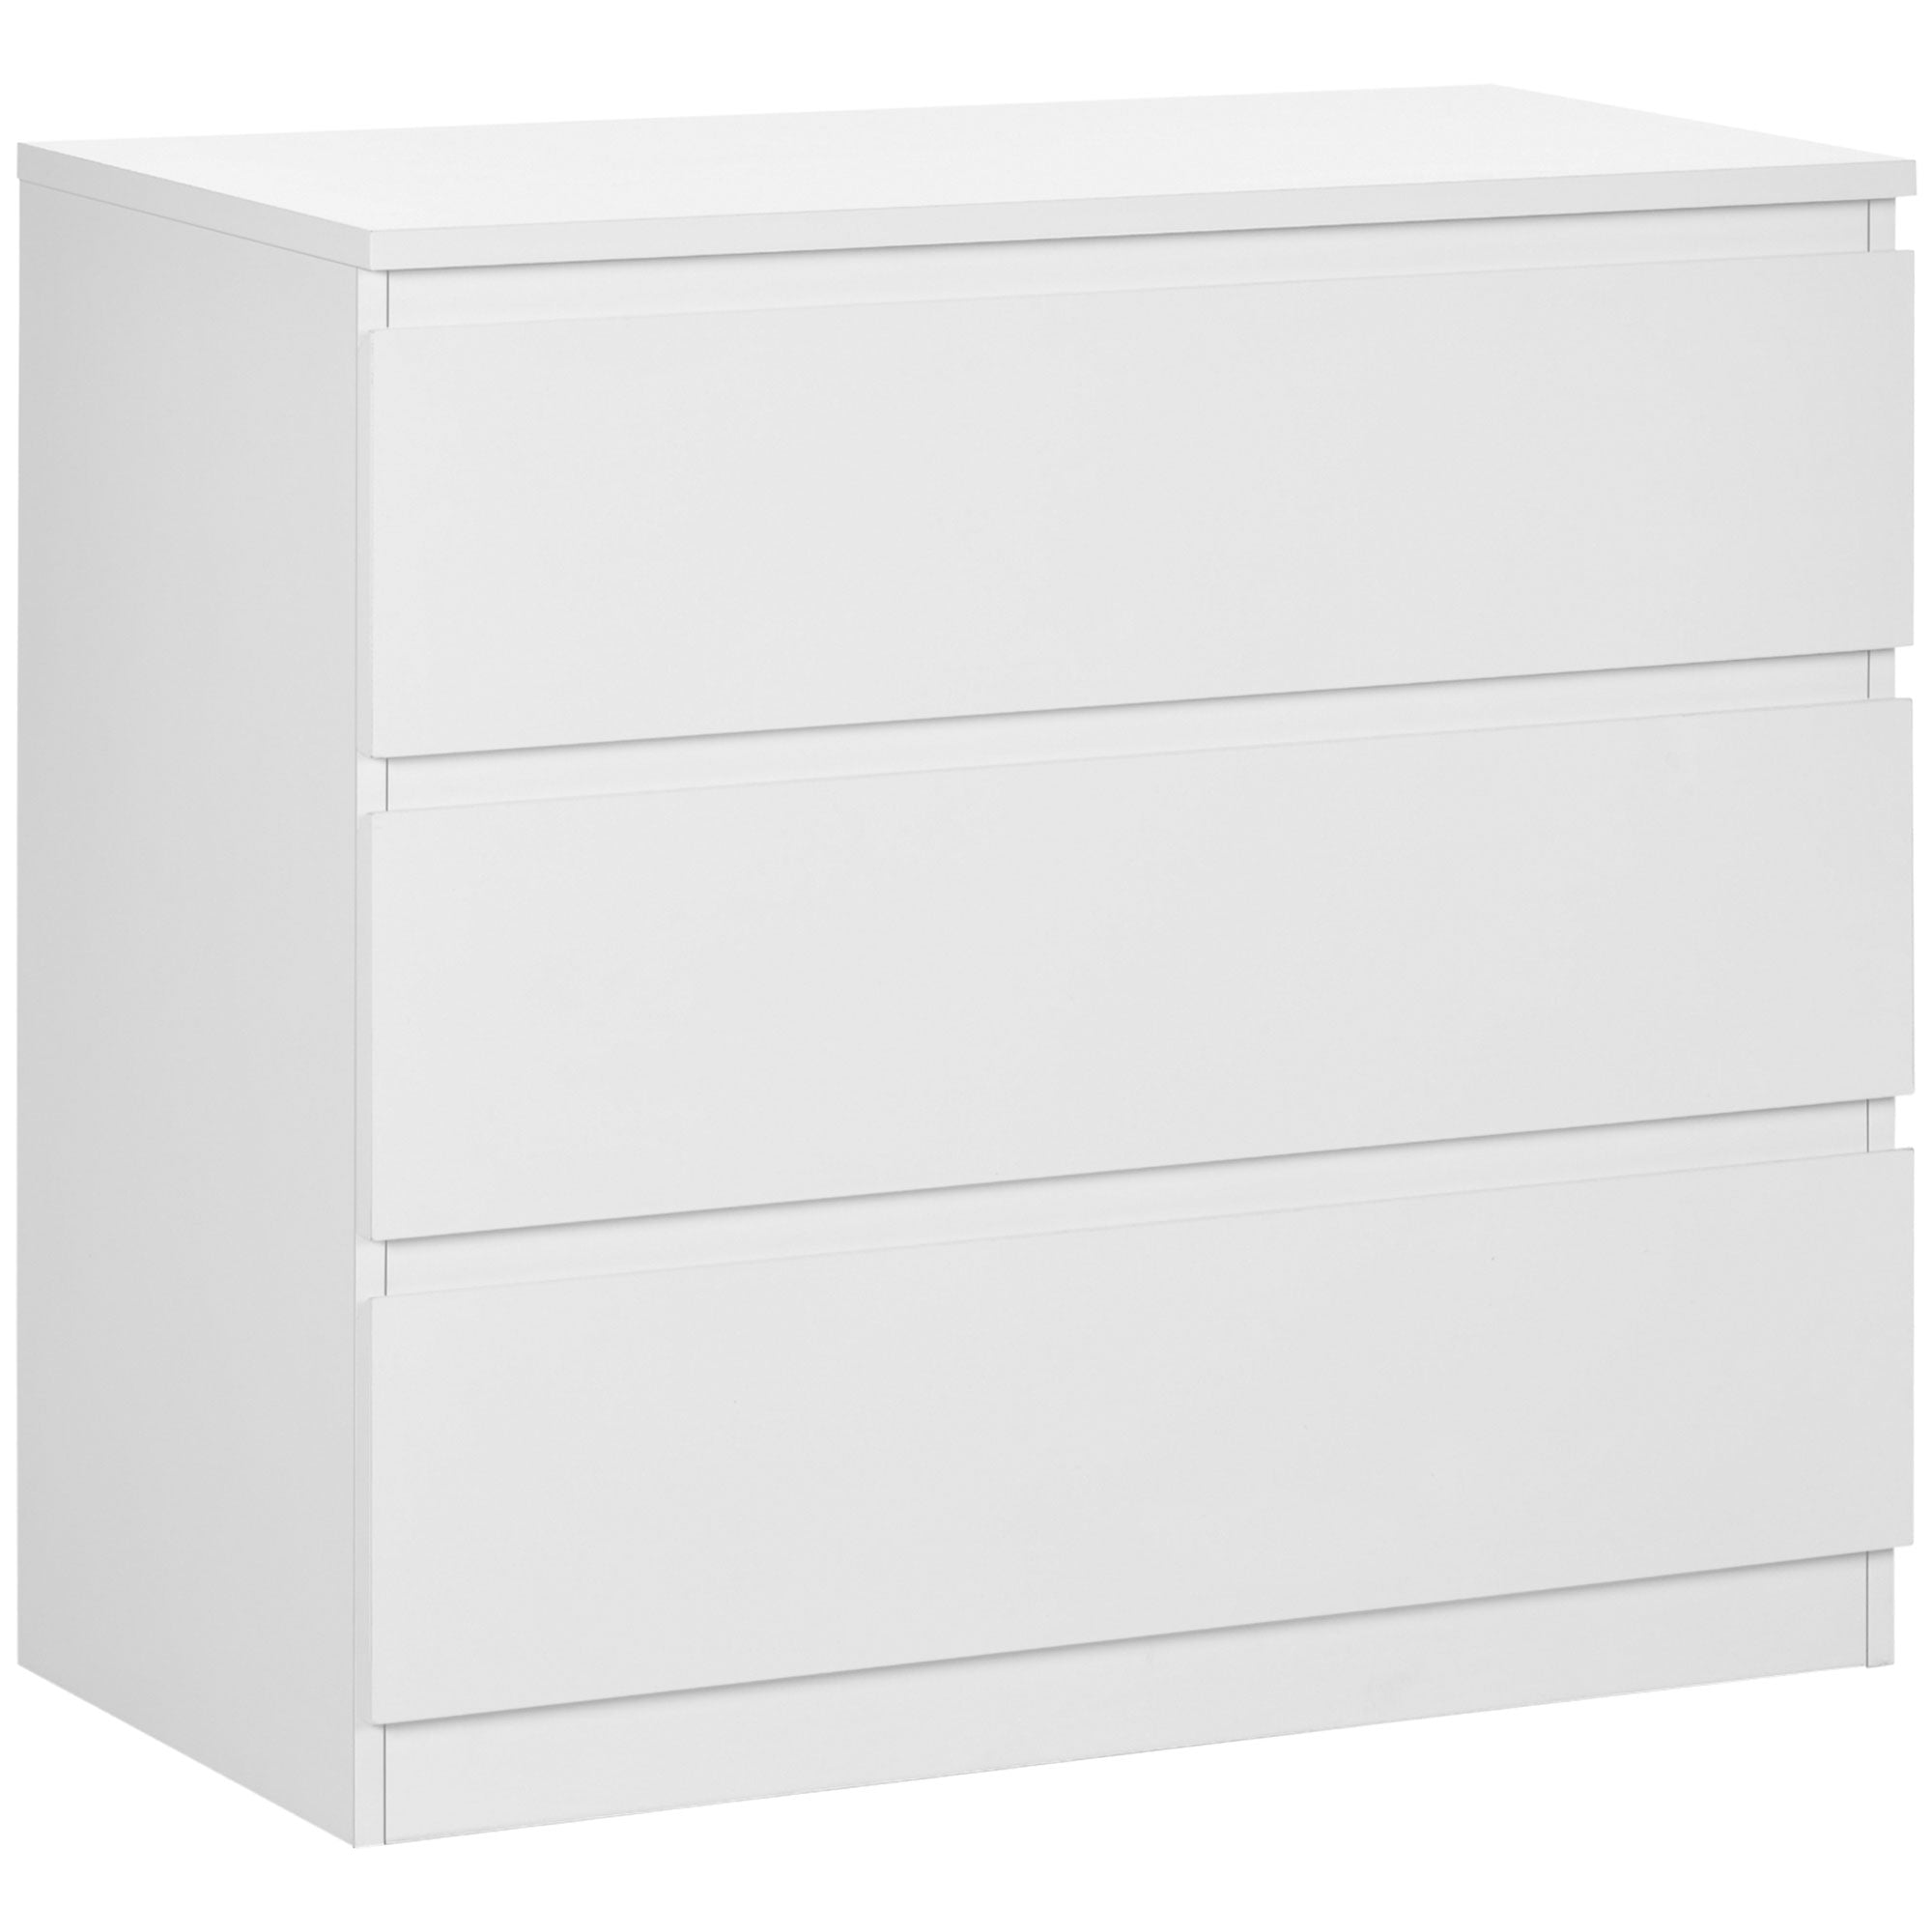 HOMCOM Chest of Drawers - 3 Drawer Storage Cabinet Unit for Bedroom - White  | TJ Hughes